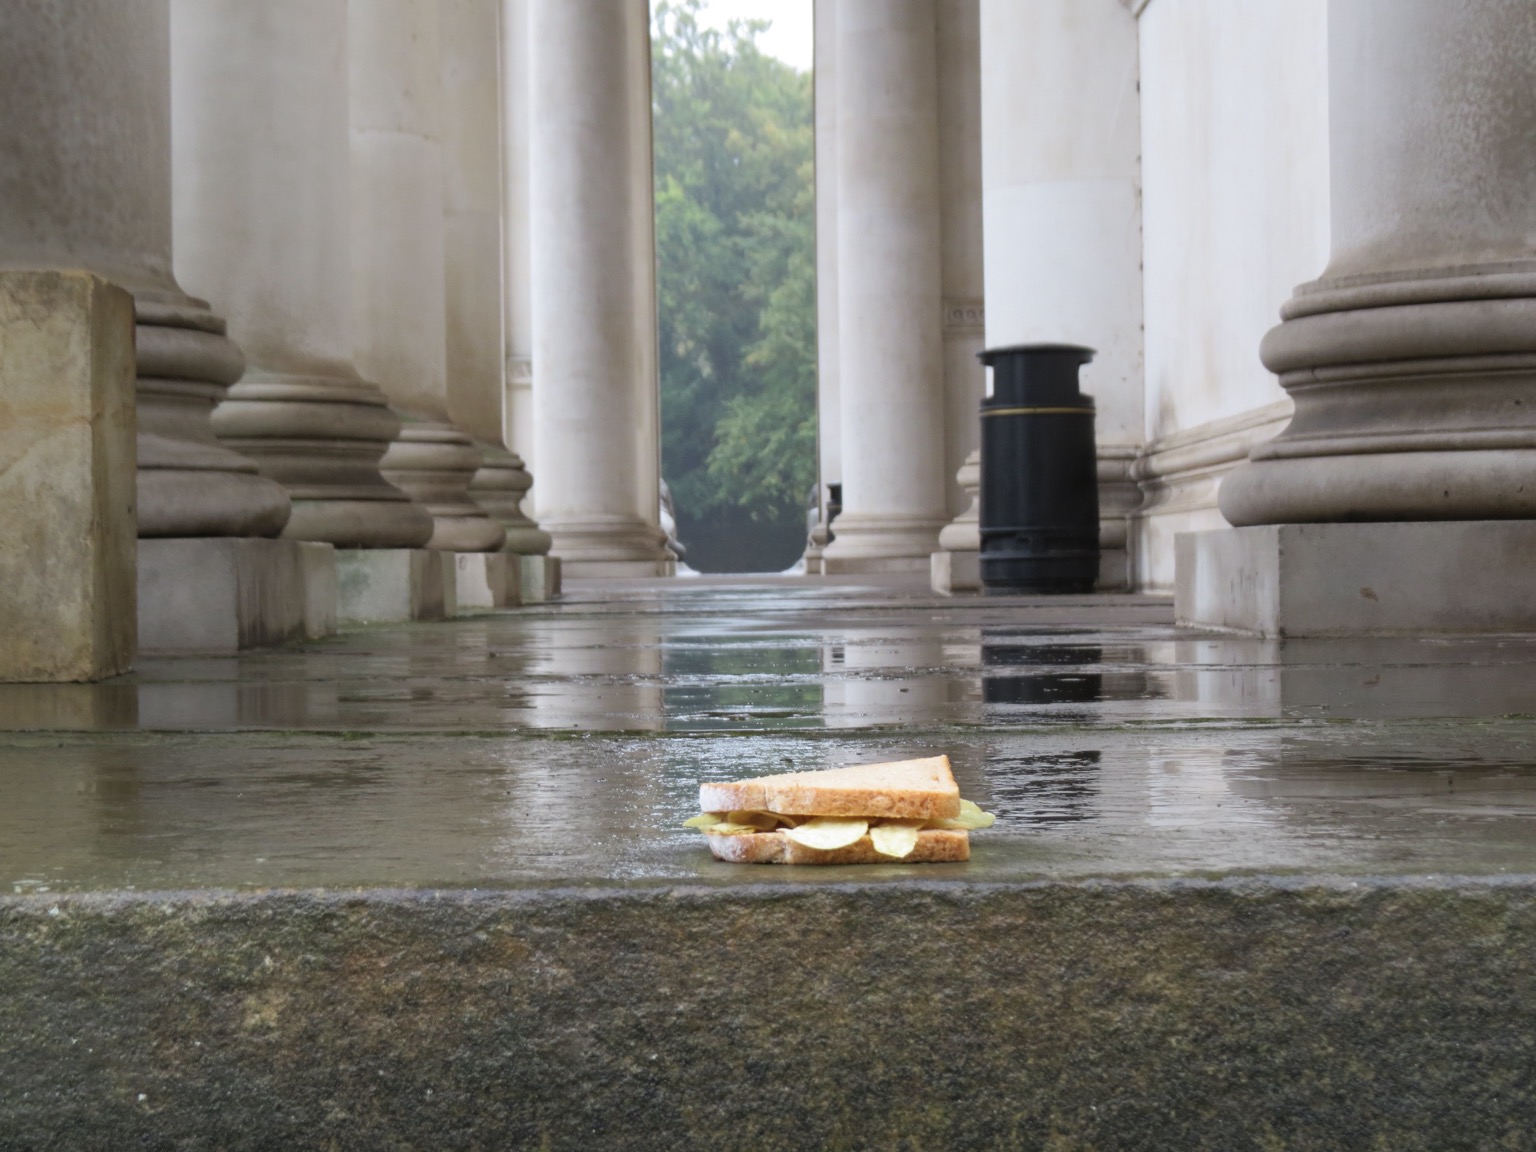 Crisp sandwich in front of stone columns and a bin